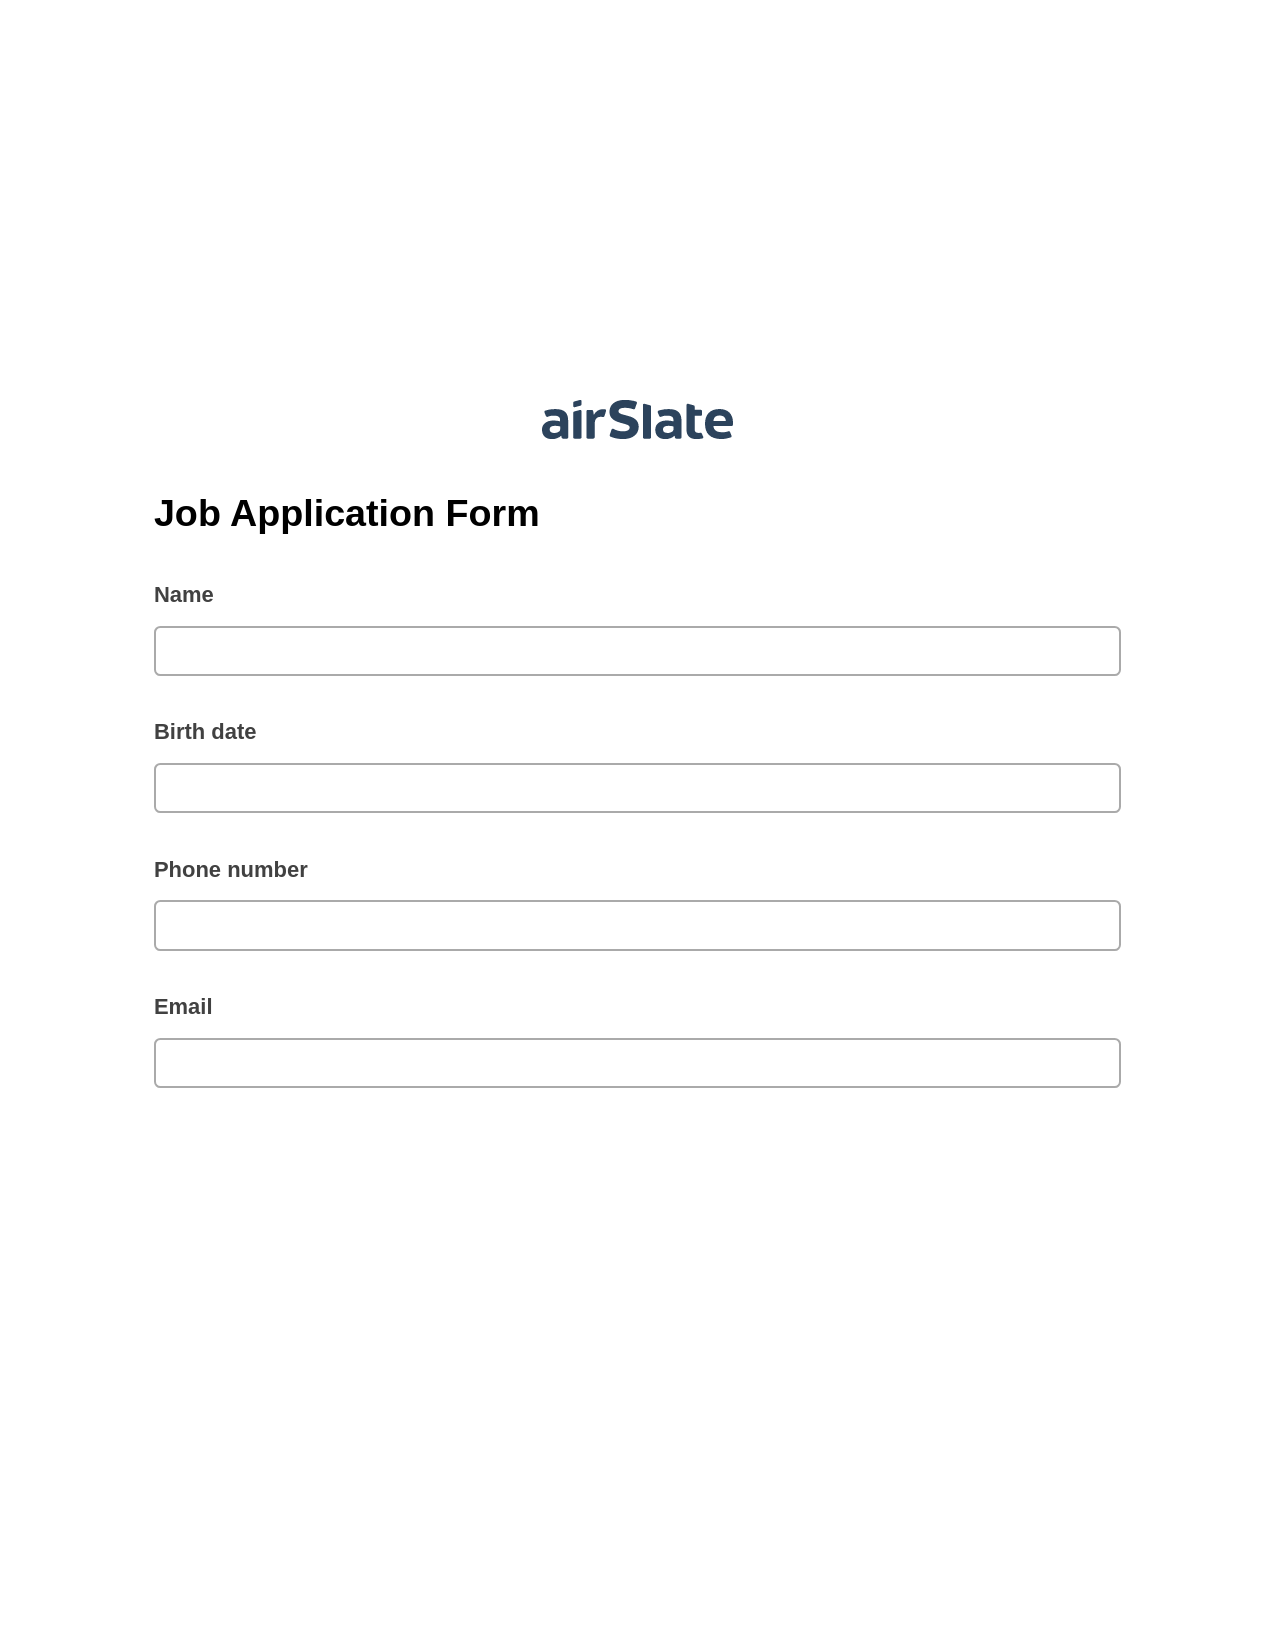 Job Application Form System Bot - Slack Two-Way Binding Bot, Update NetSuite Records Bot, Google Drive Bot